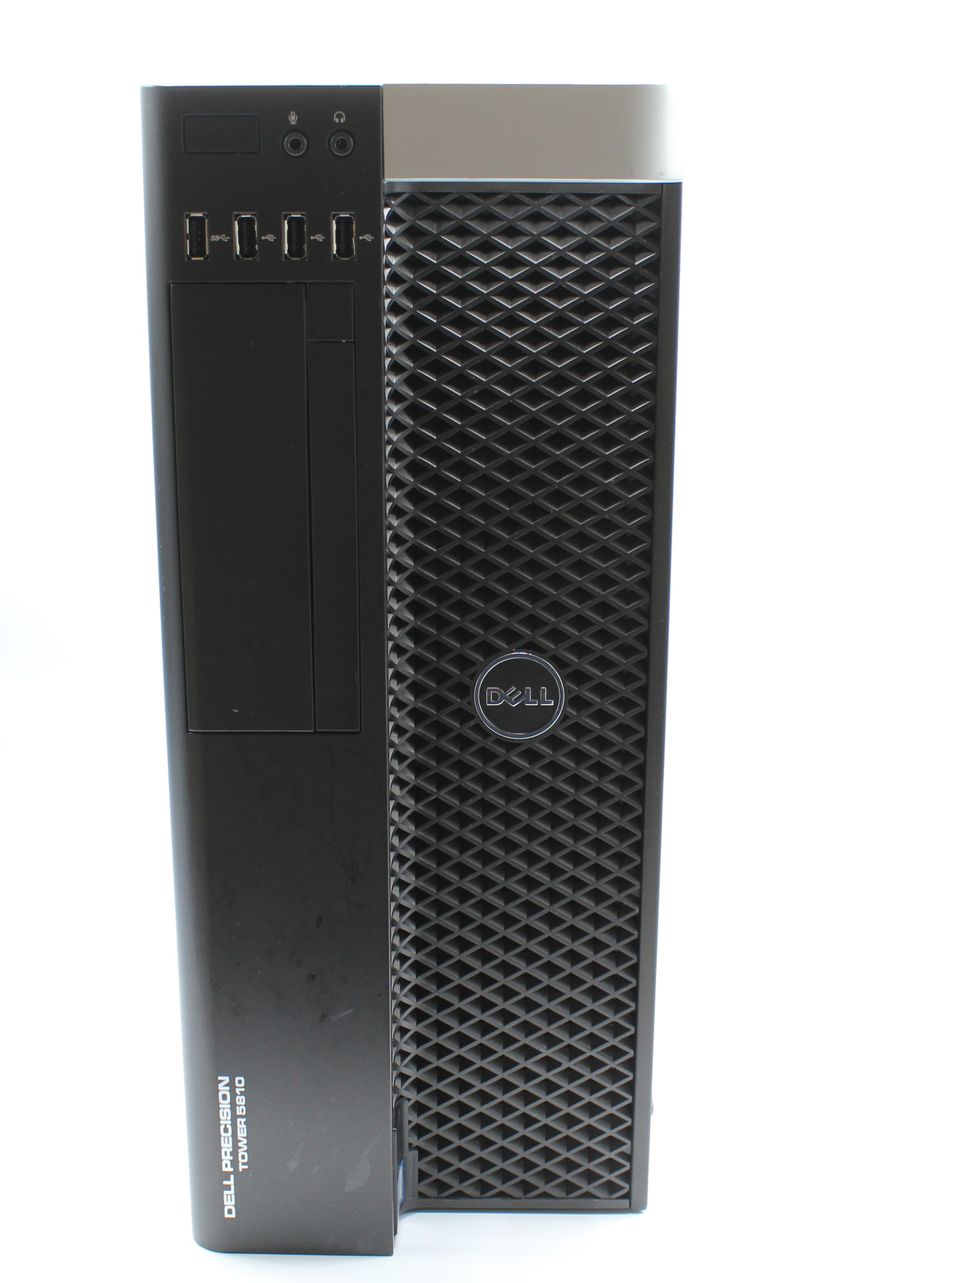 Dell Precision Tower 5810 Xeon E5-2640v4/64GB/K620/512 pöytätietokone, HUOLLETTU